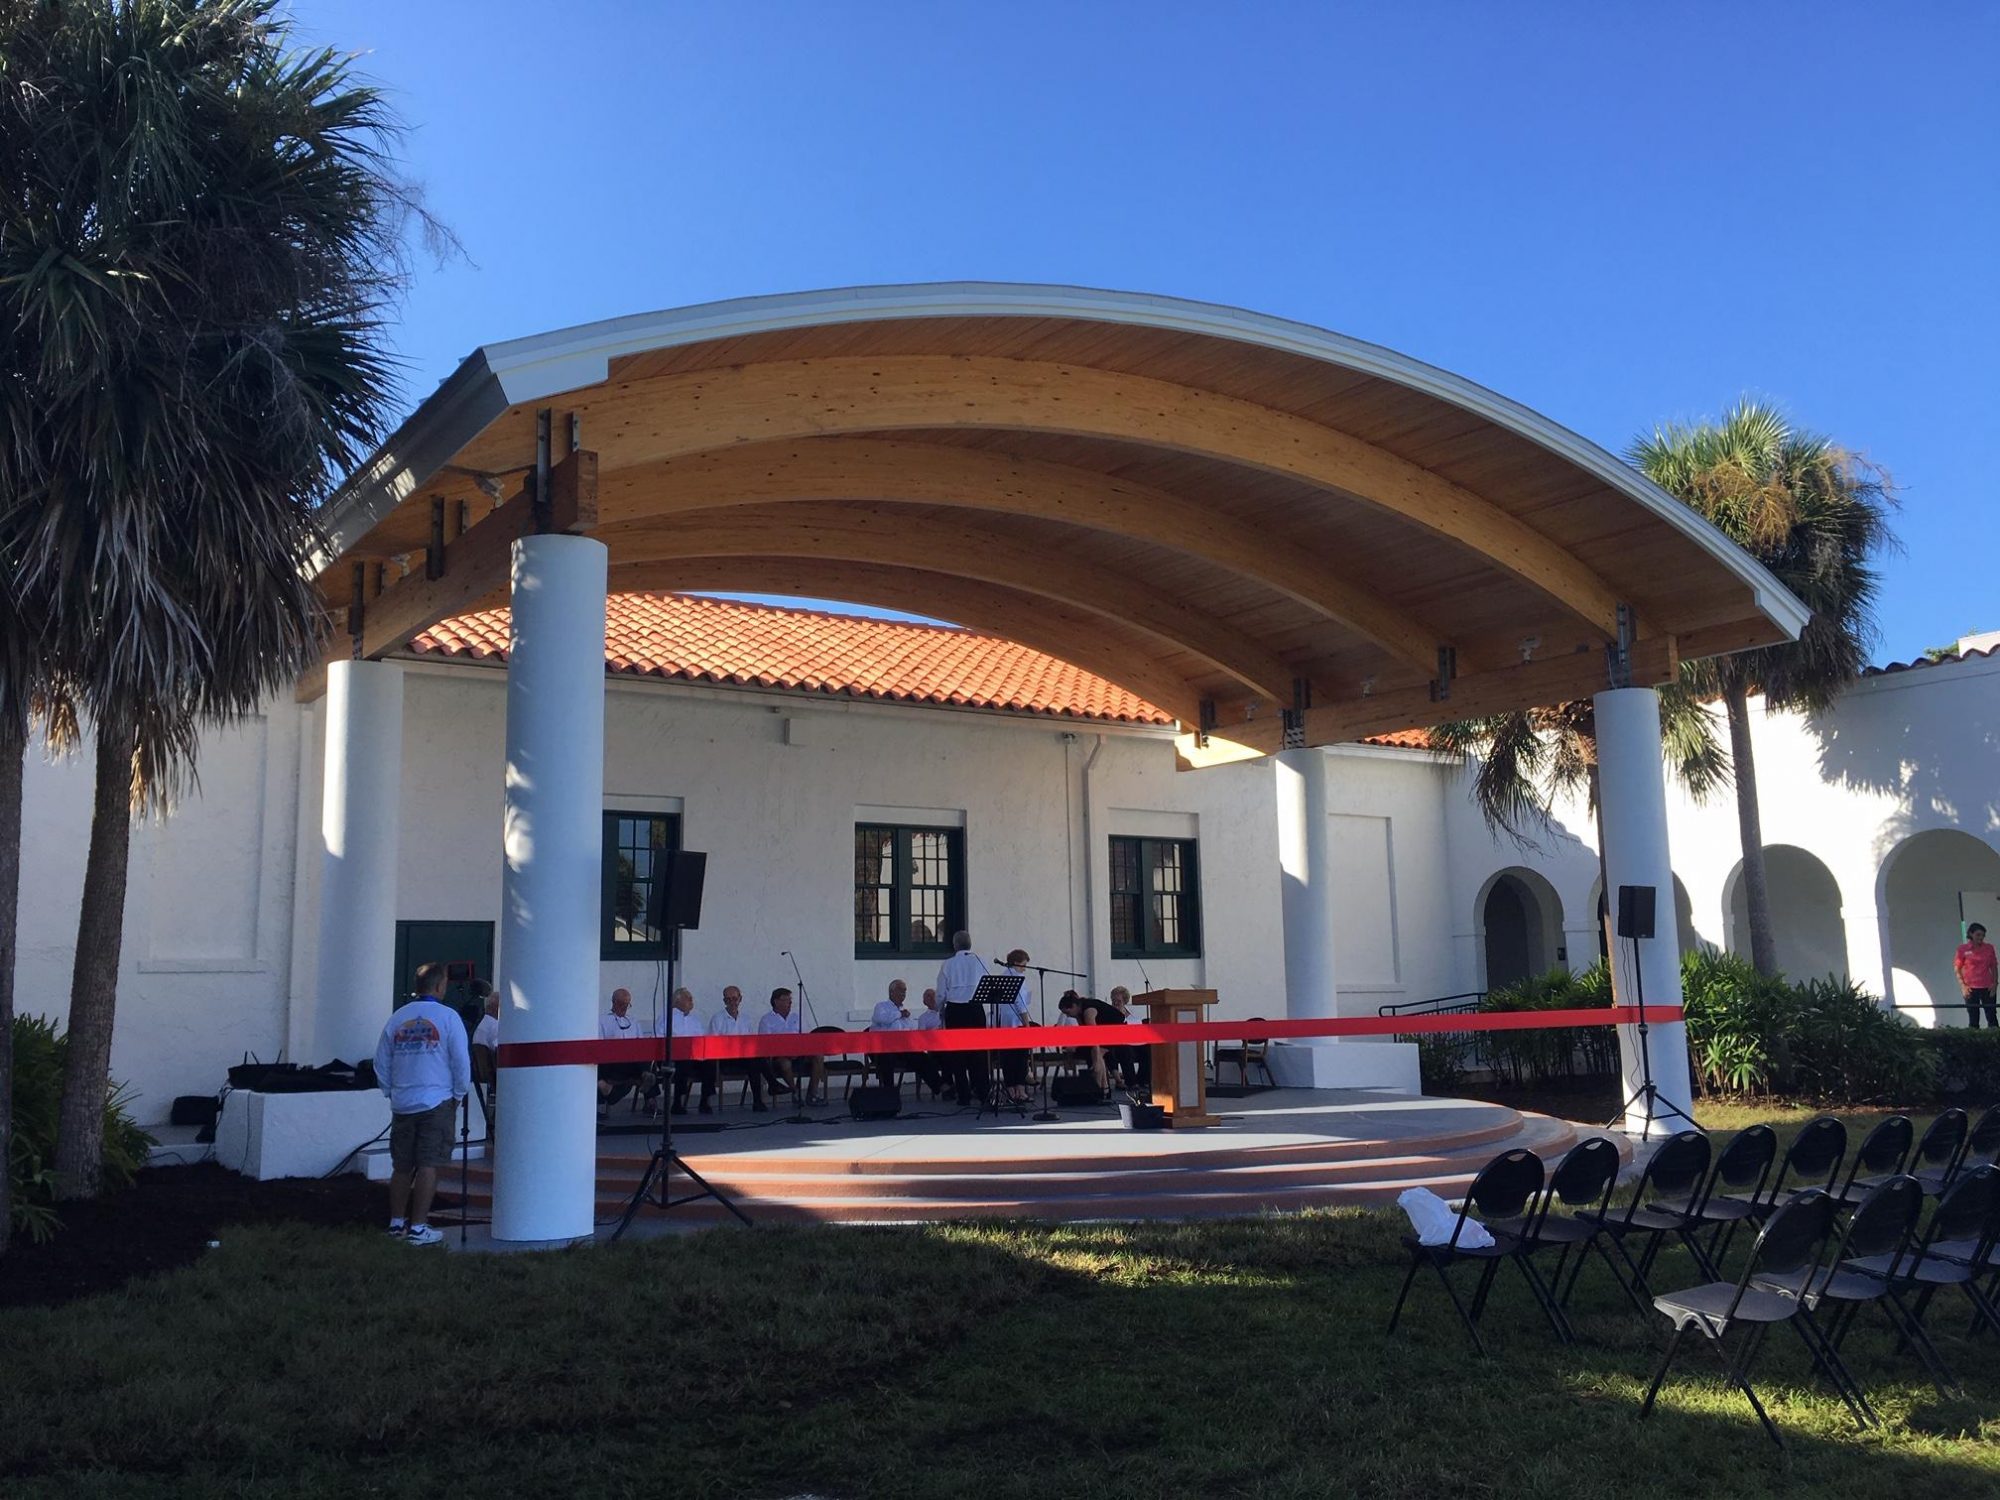 Boca Grande Pavilion Christel Construction